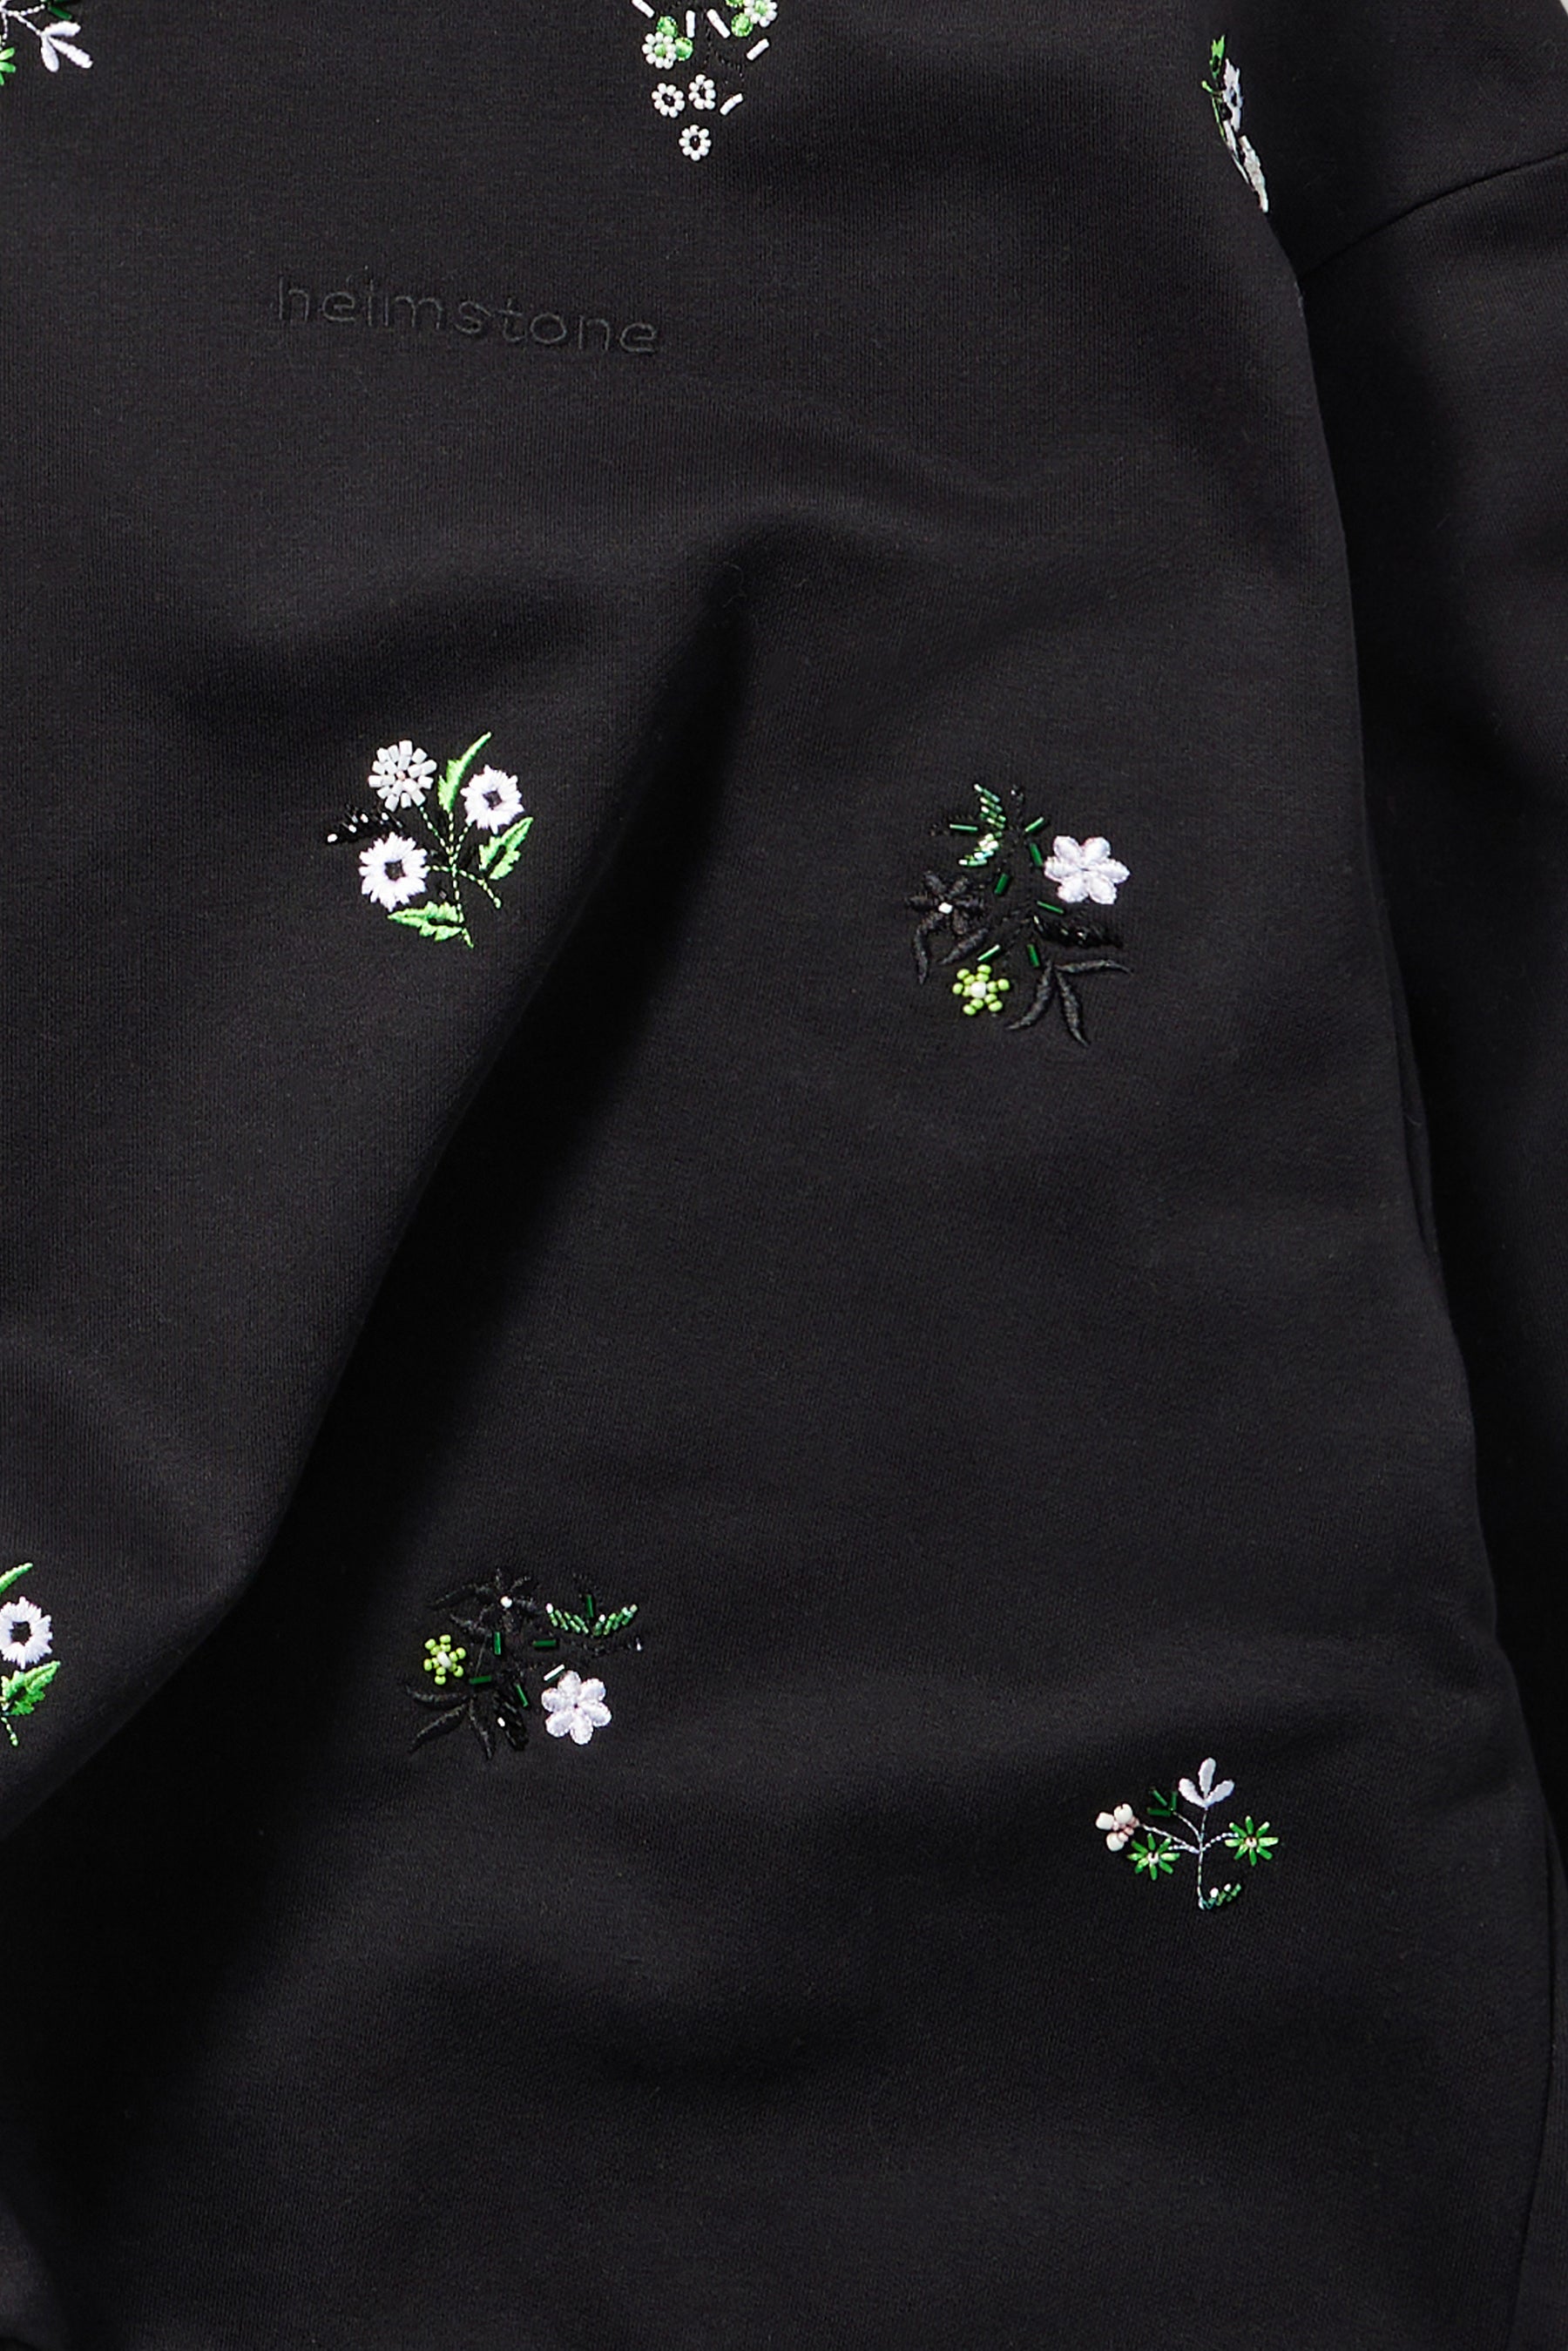 Elliott pants in black beaded embroidered fleece